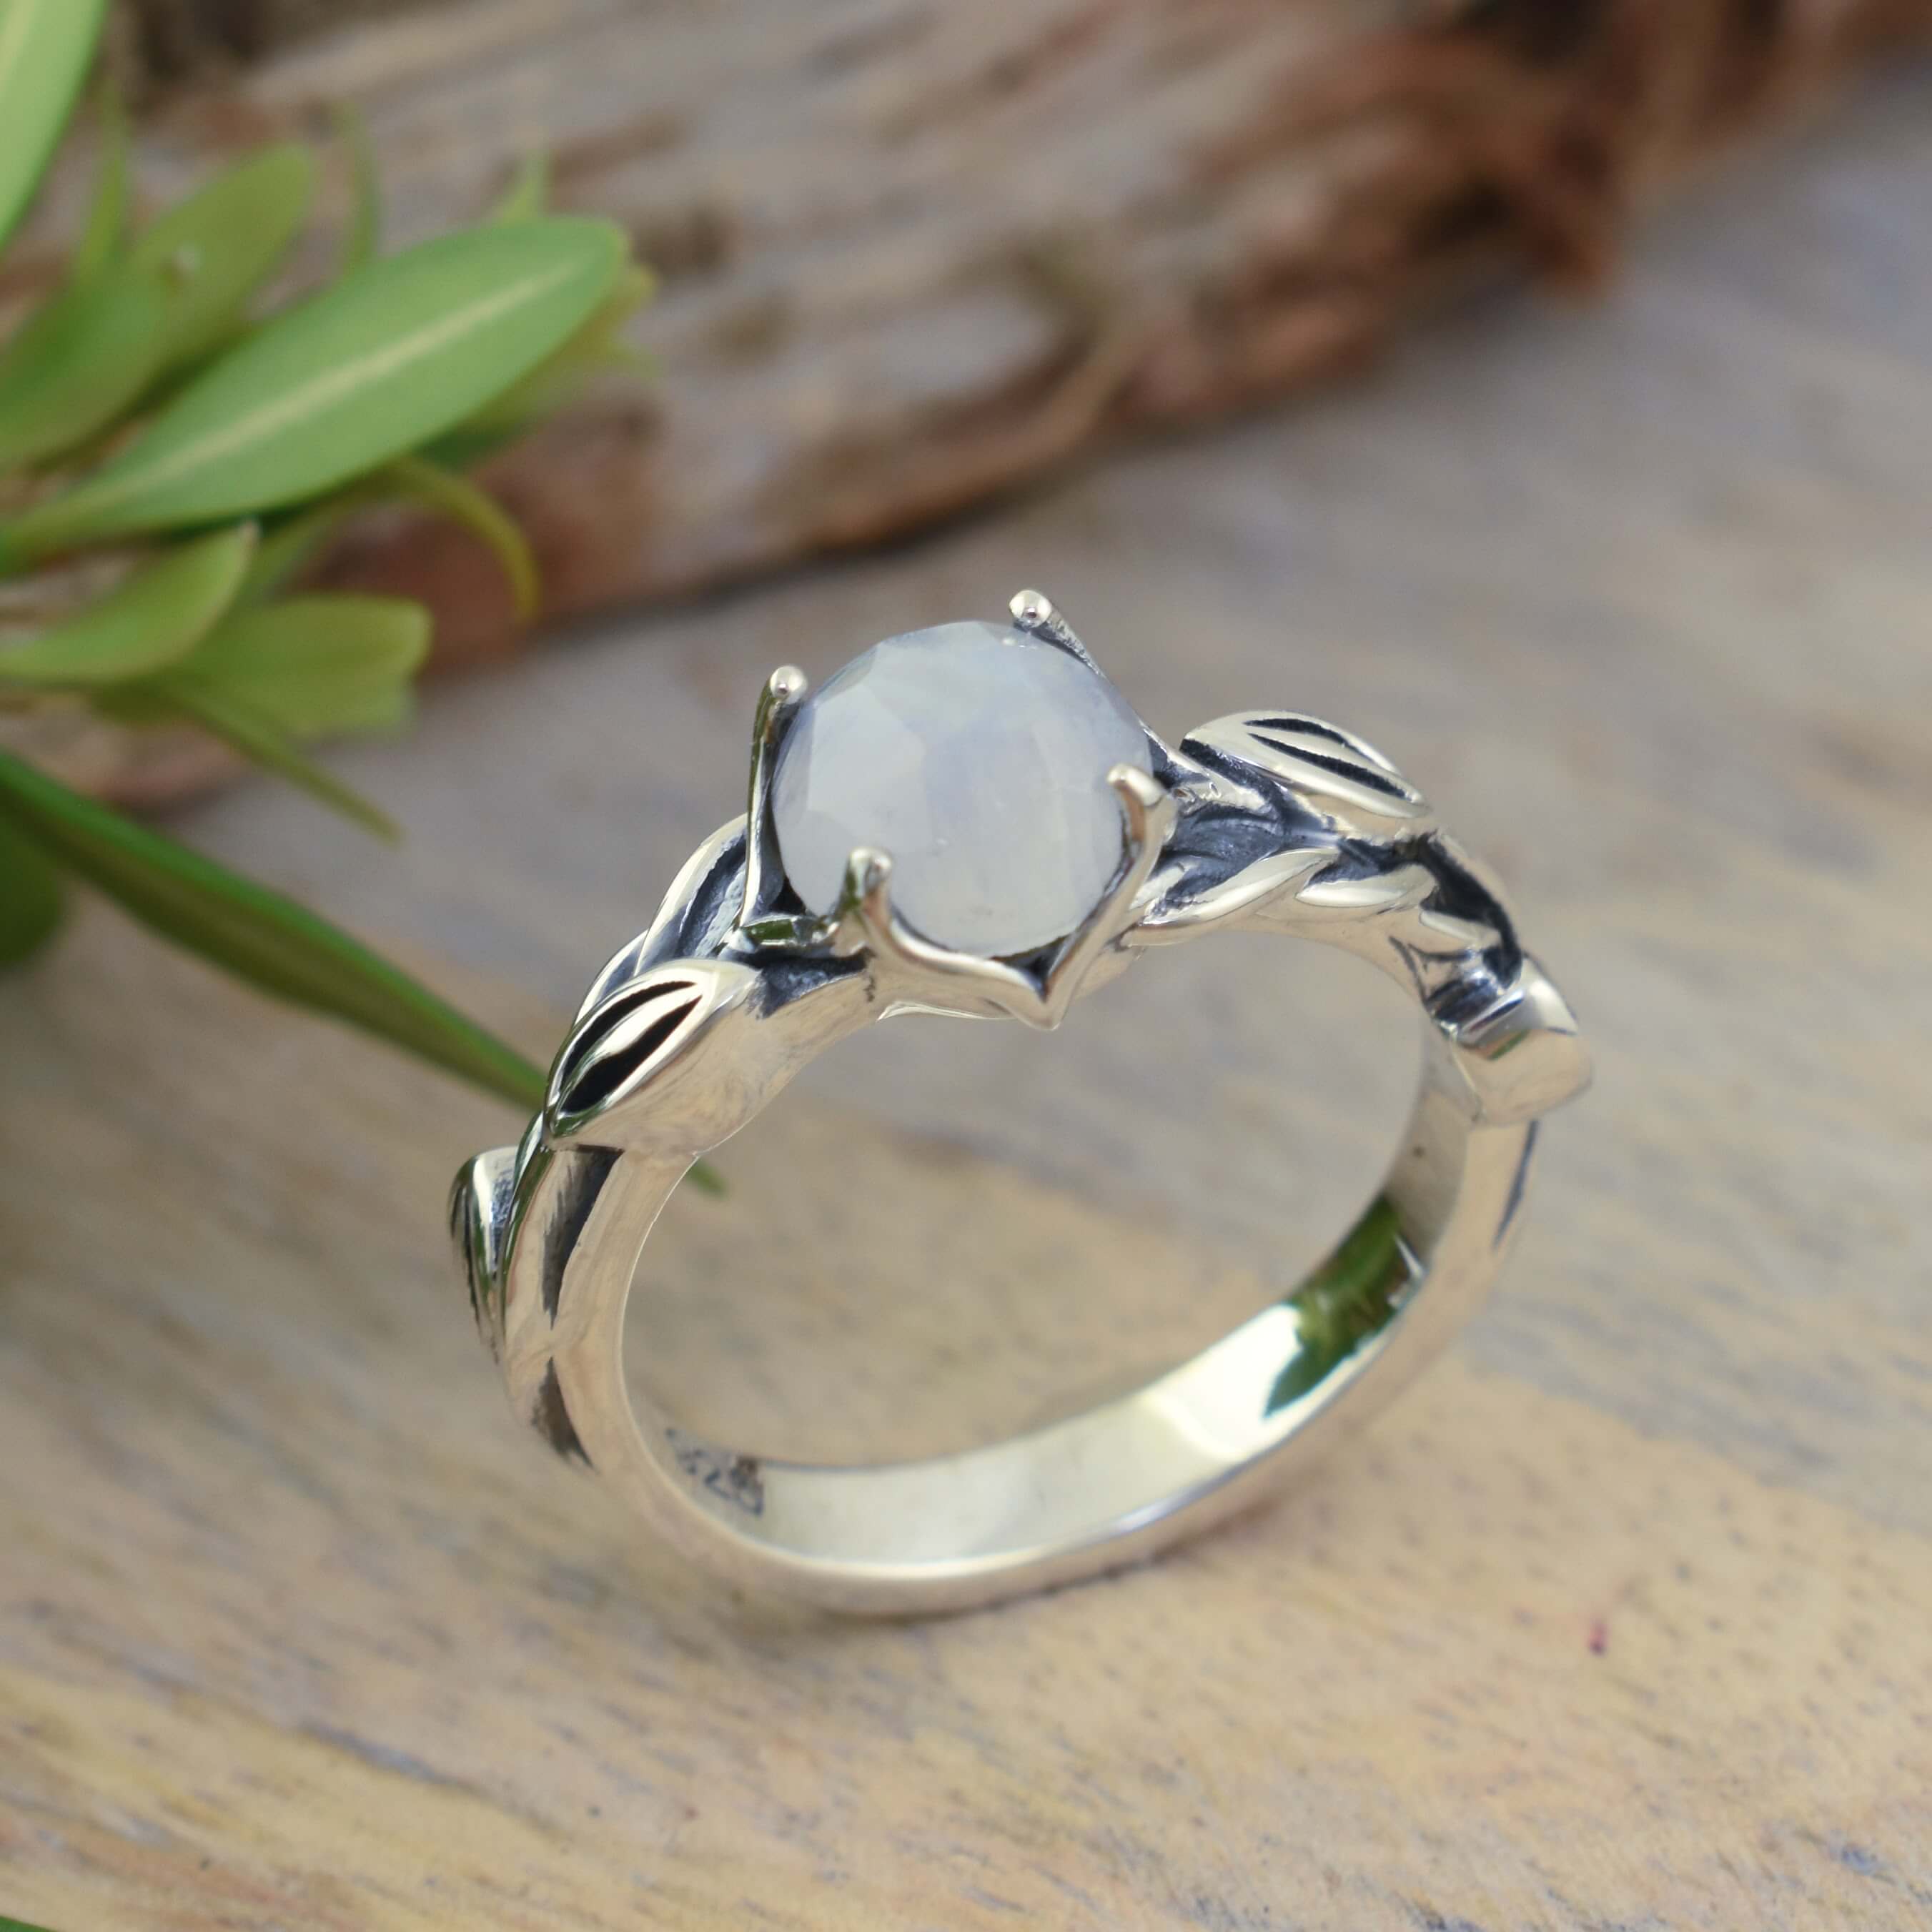 Vine-inspired ring with round rainbow moonstone